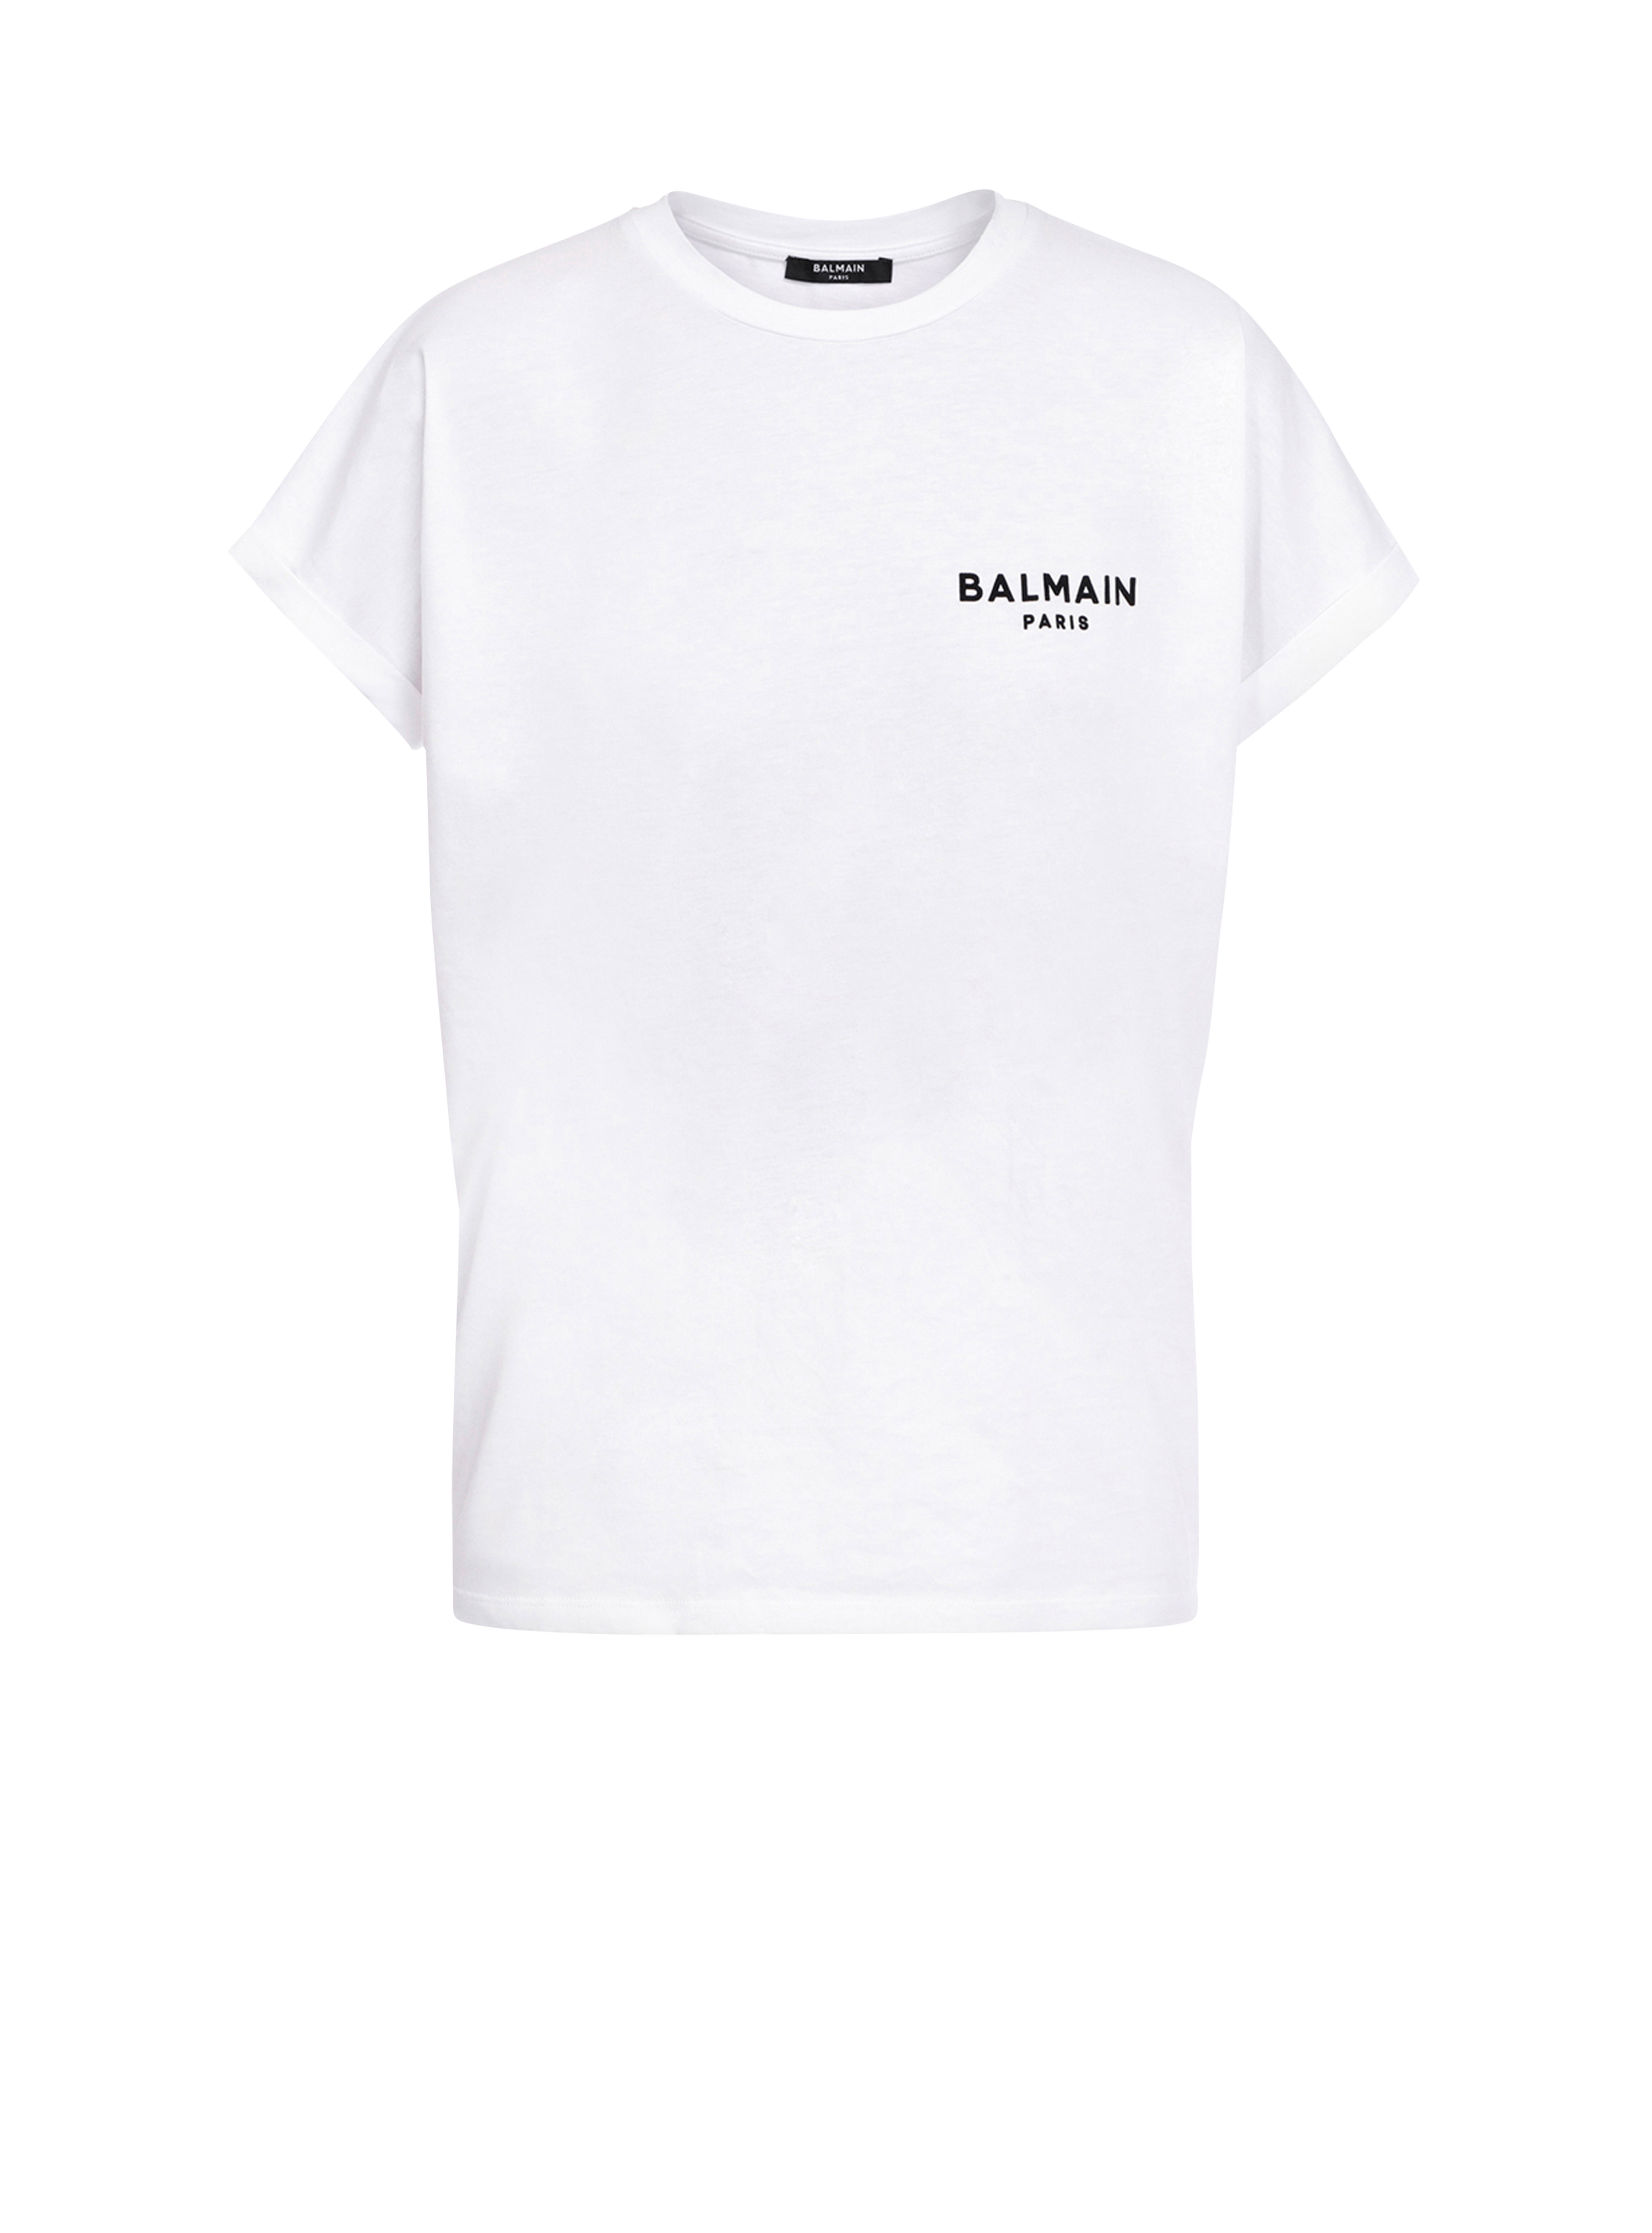 Camiseta de algodón de diseño ecológico con pequeño logotipo de Balmain flocado, blanco